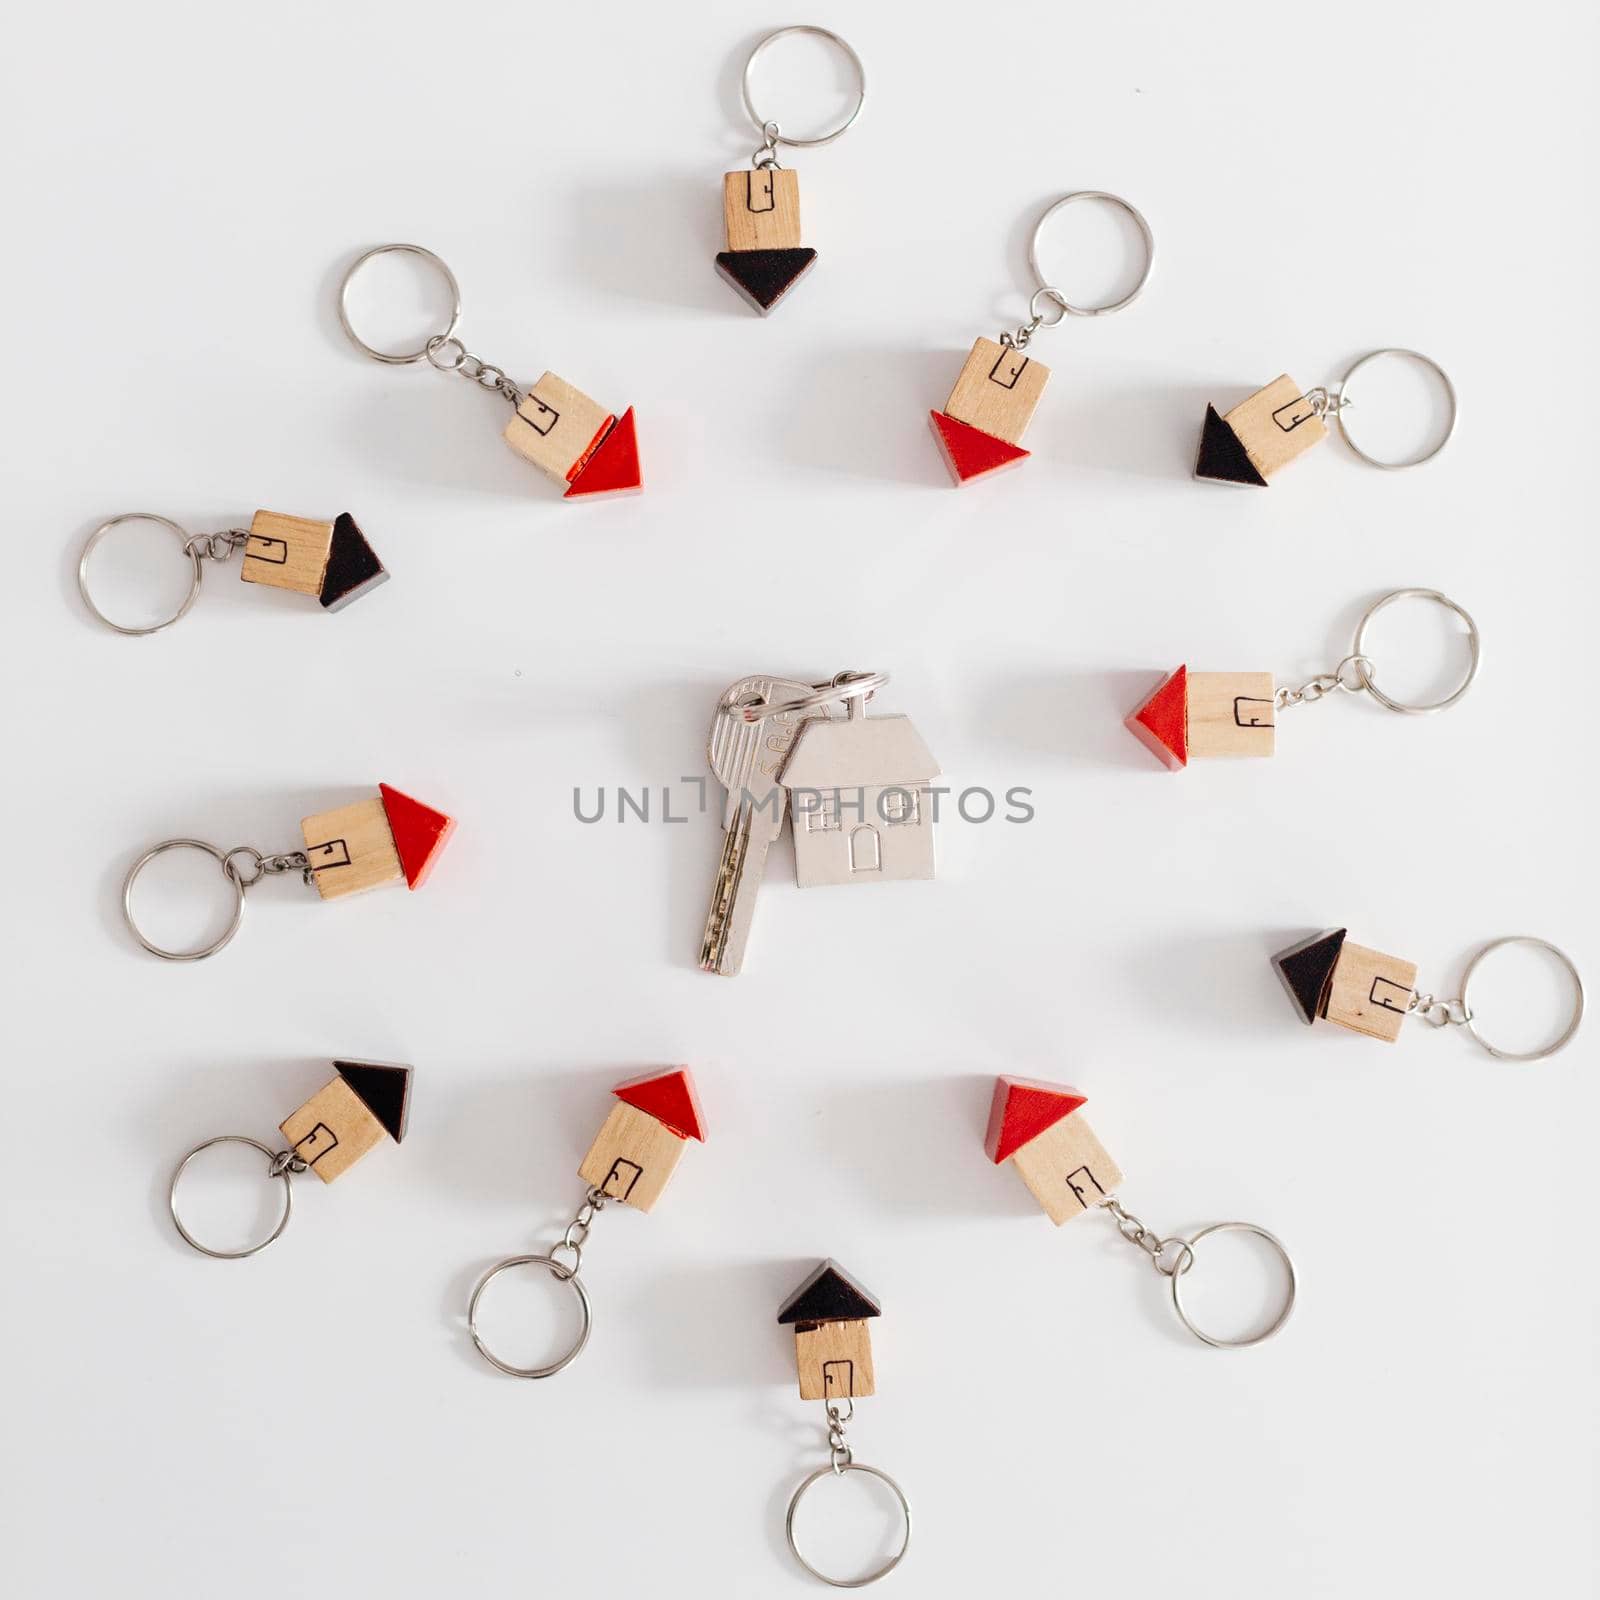 house keys small figurines. High quality photo by Zahard